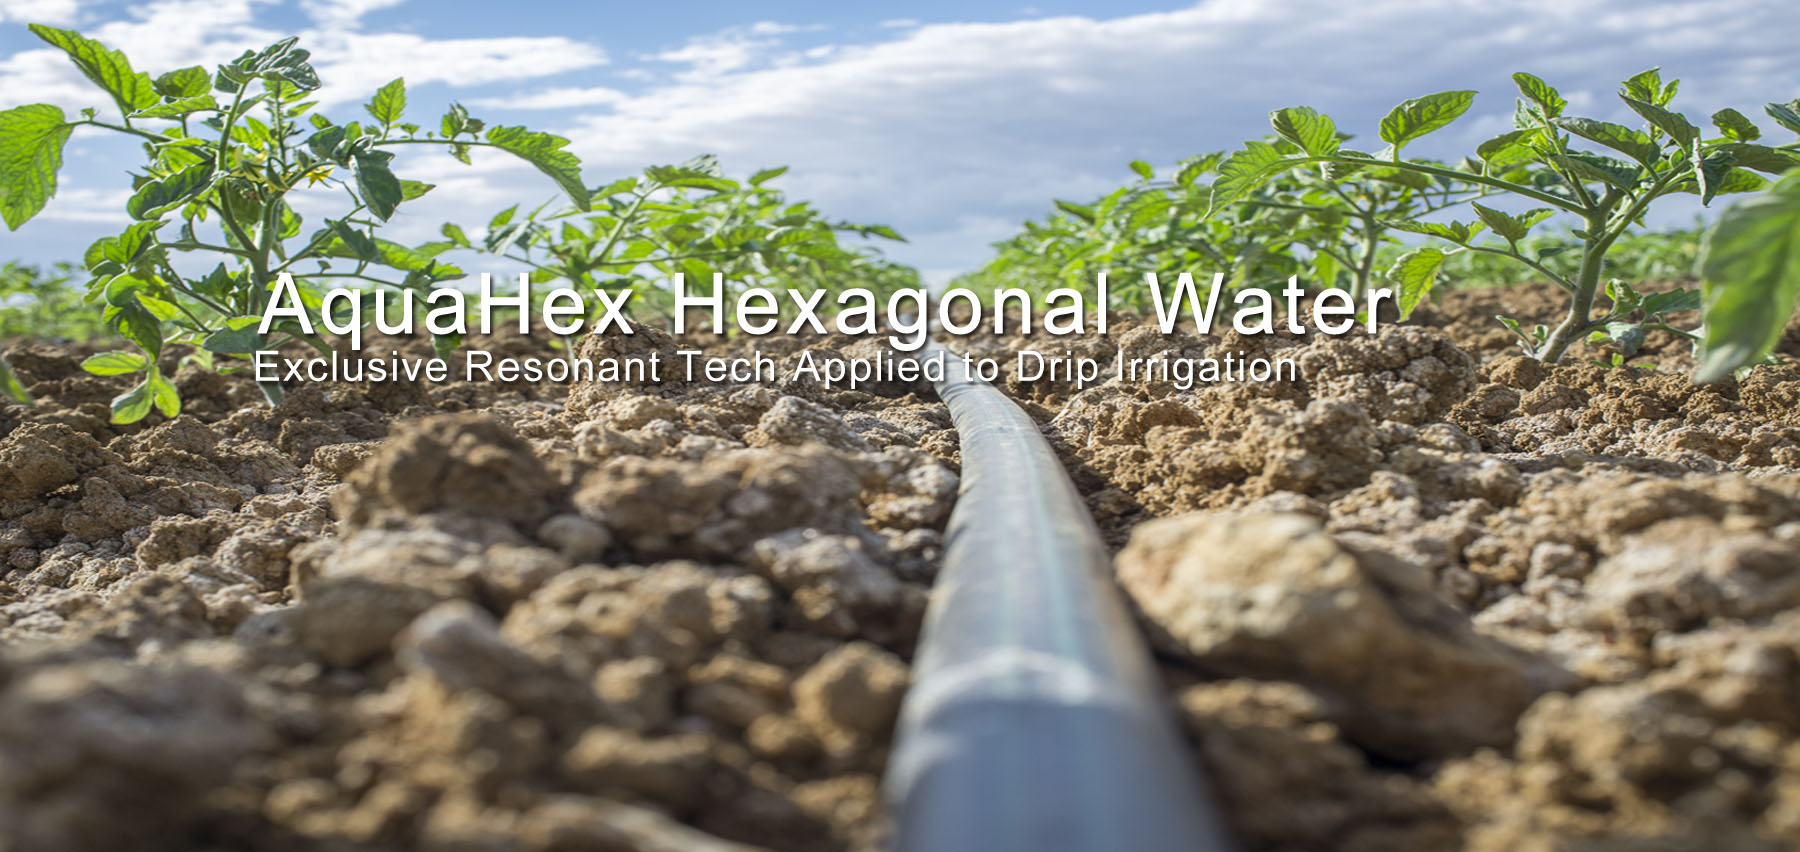 AquaHex hexagonal water for drip irrigation